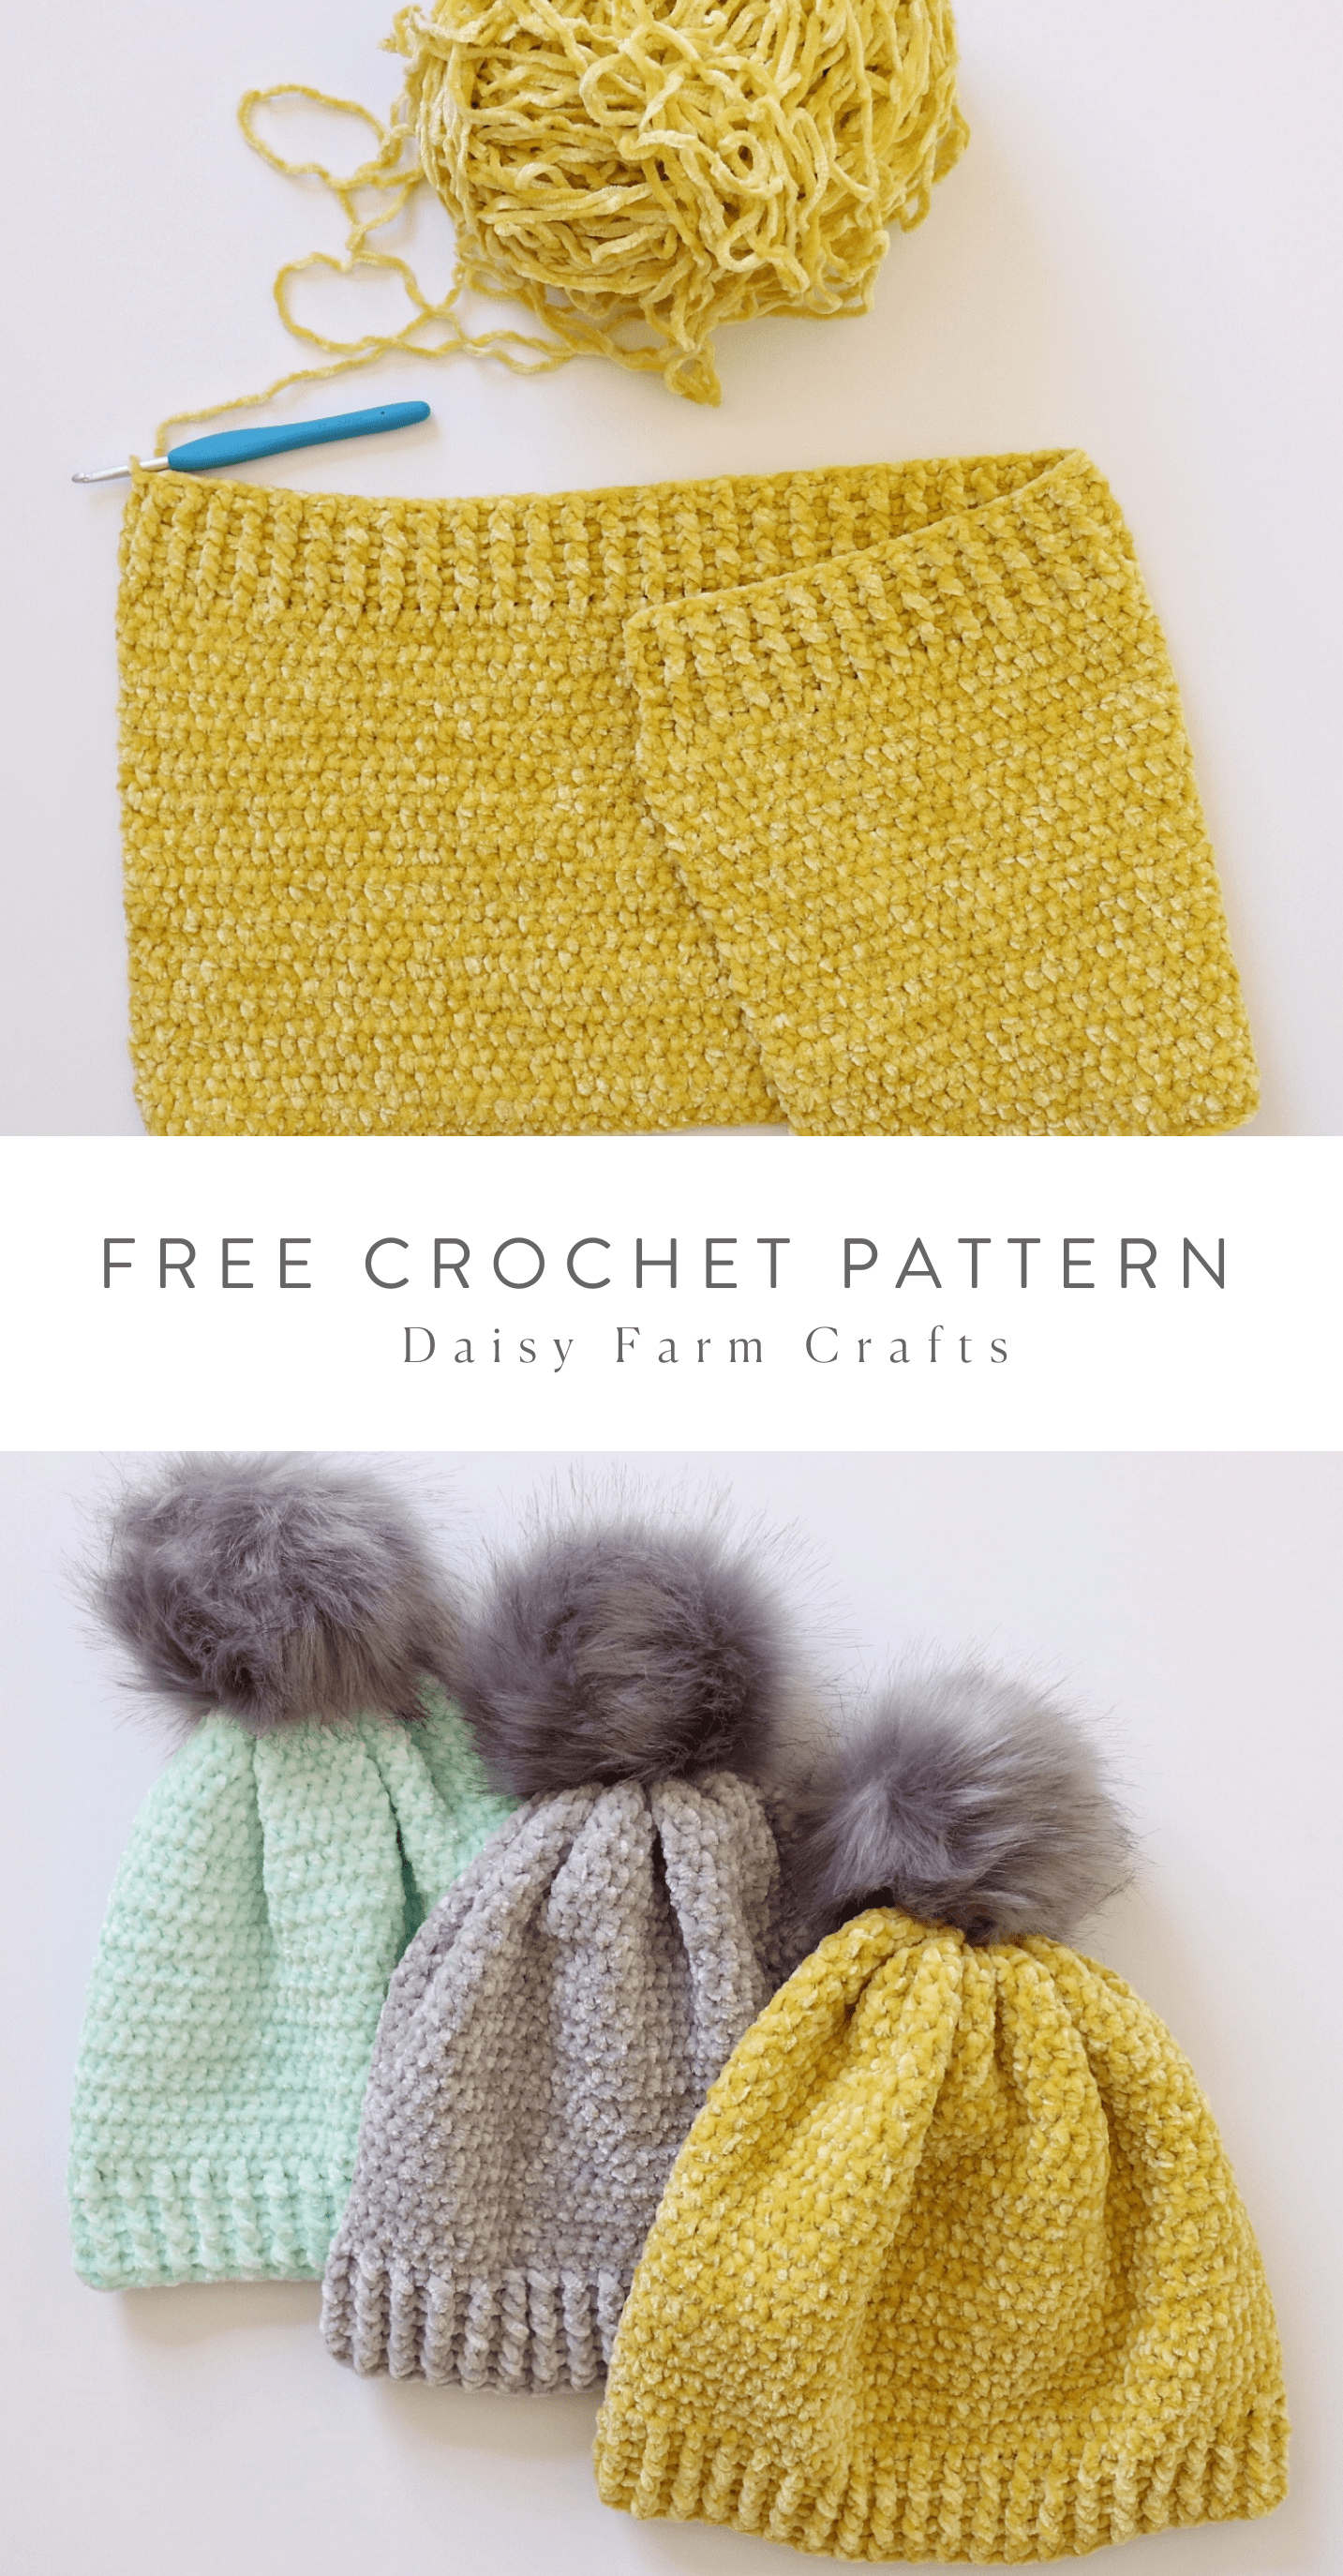 Free Crochet Pattern - Velvet Winter Hats -   17 knitting and crochet Hats winter ideas